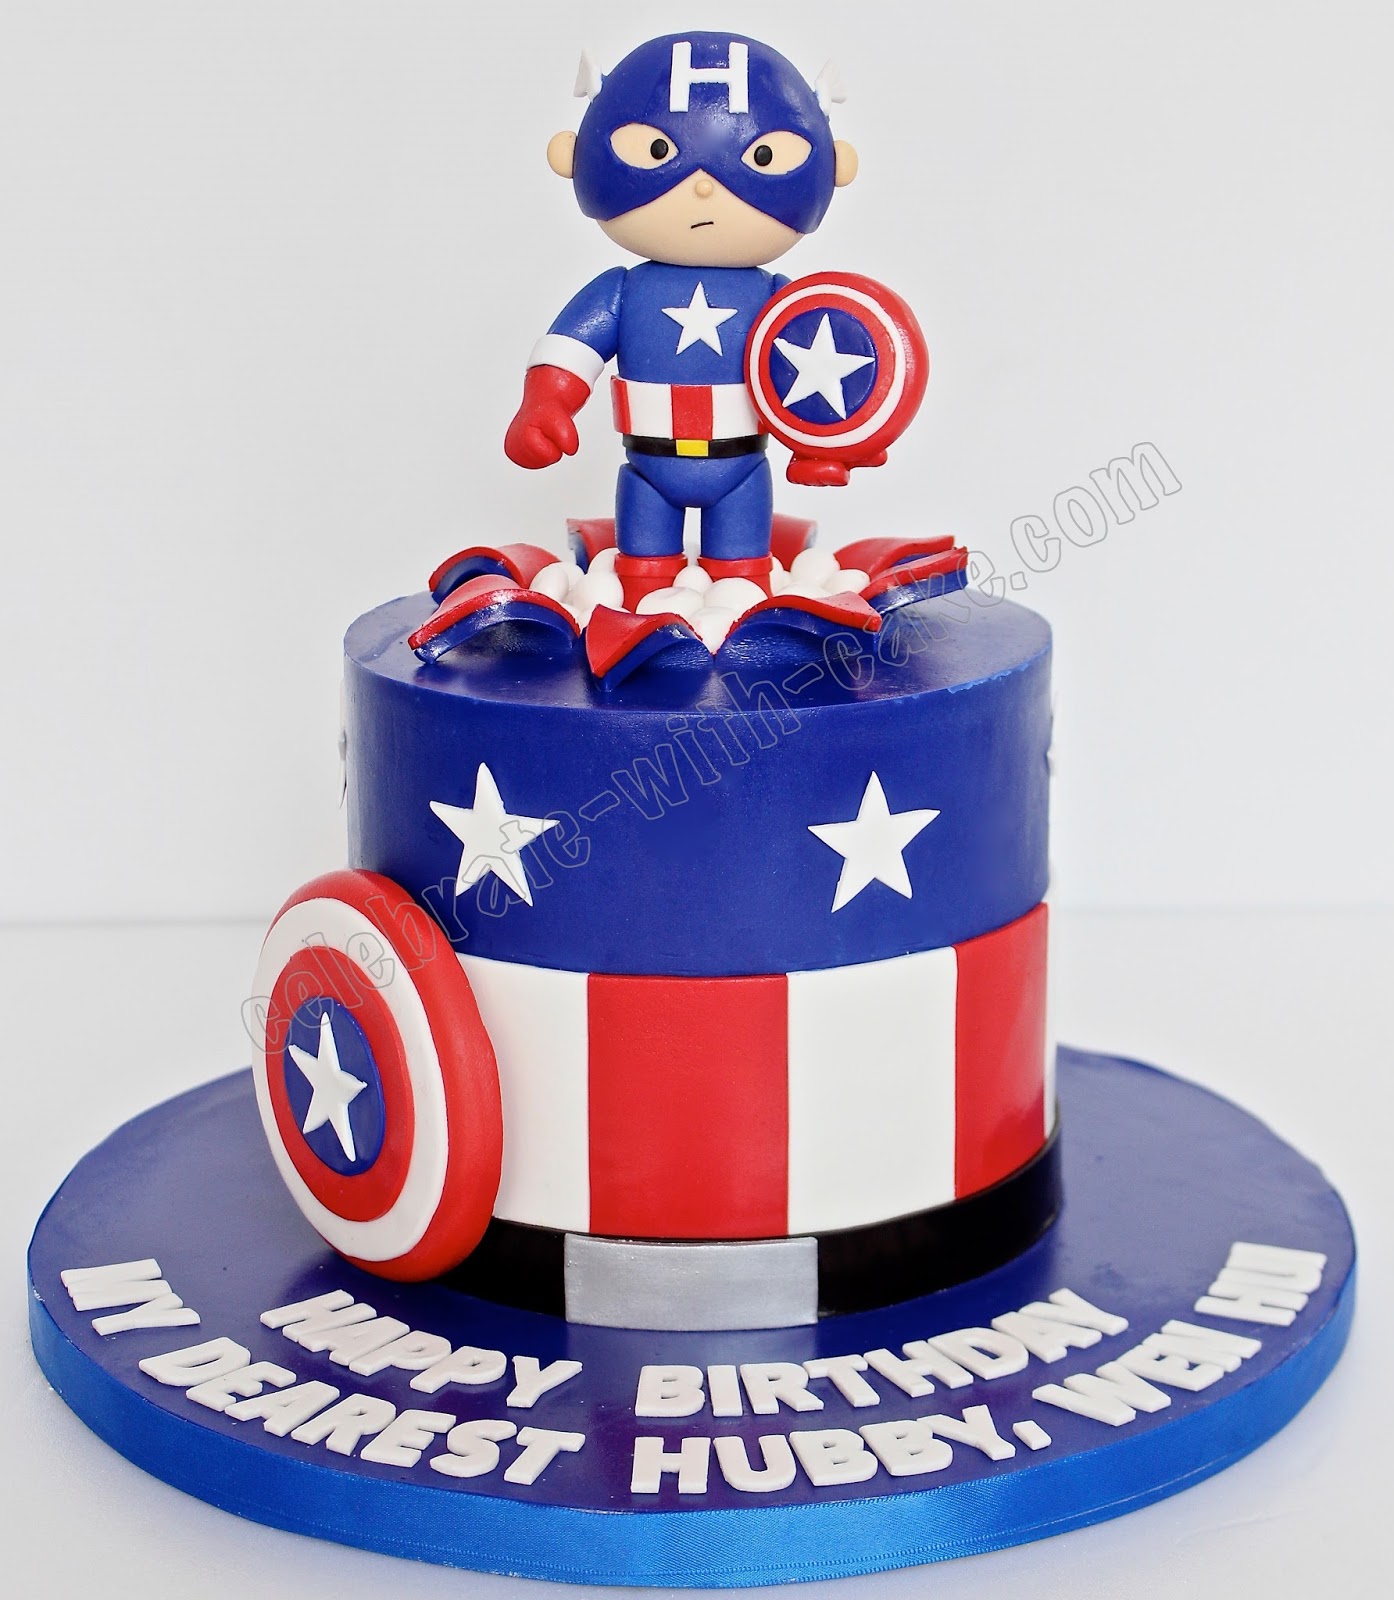 Best Captain America Theme Cake In Hyderabad | Order Online